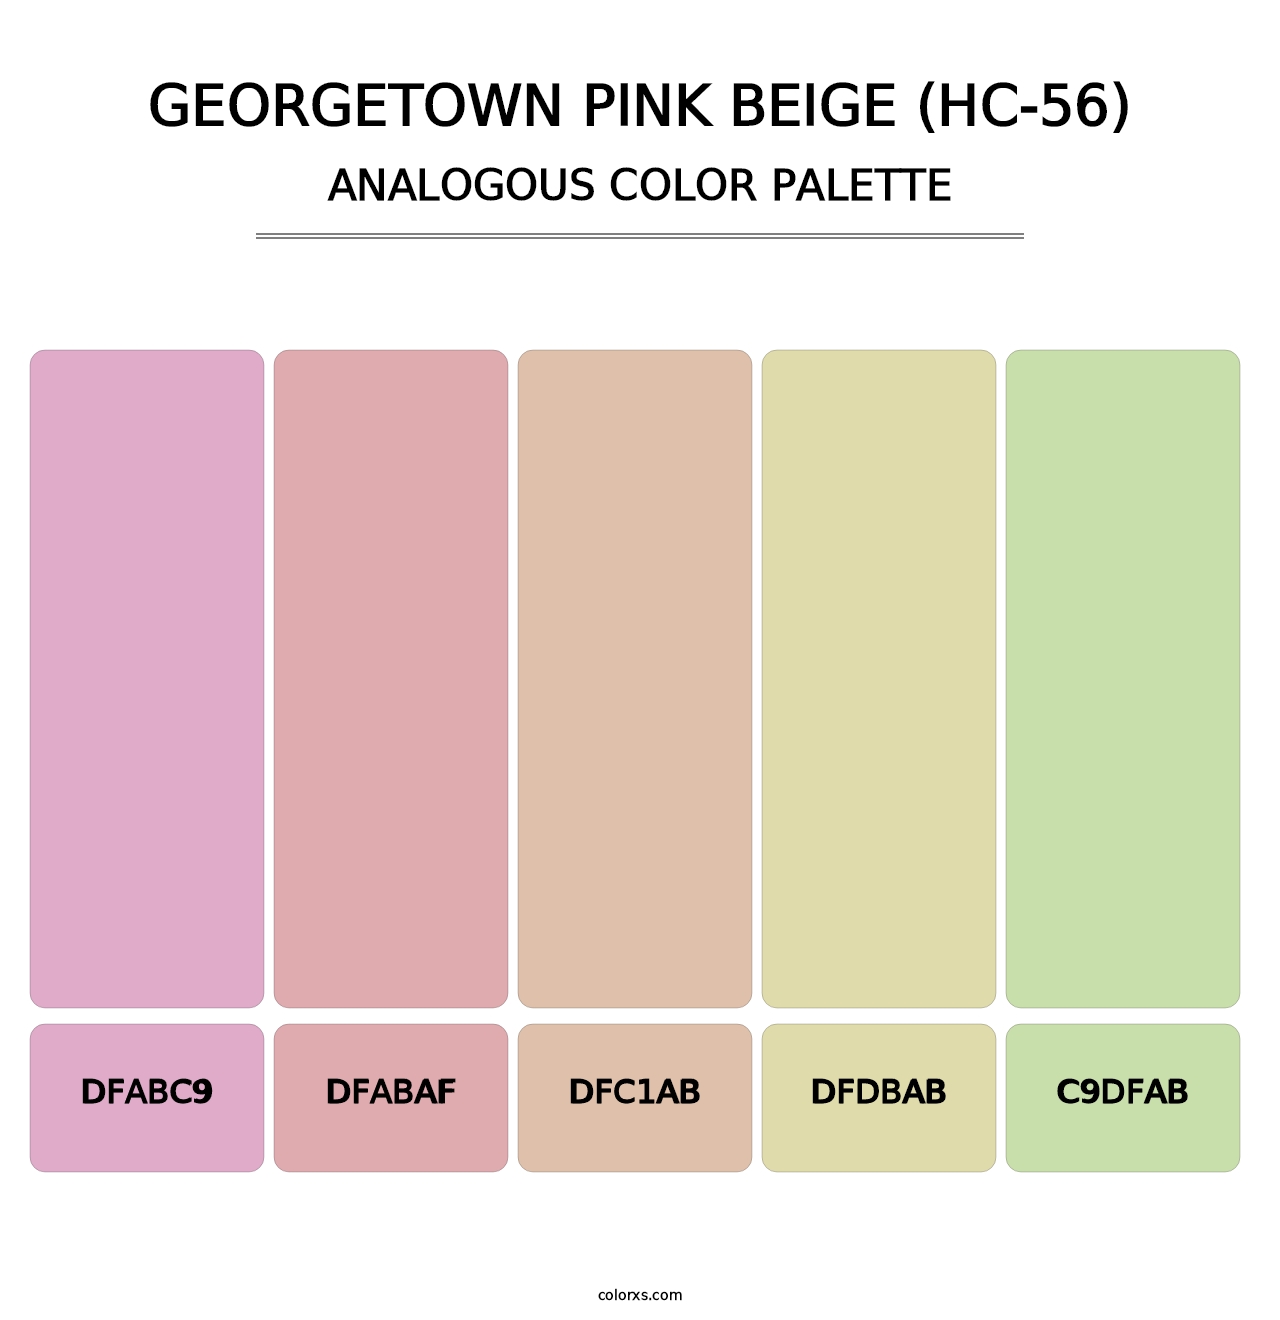 Georgetown Pink Beige (HC-56) - Analogous Color Palette